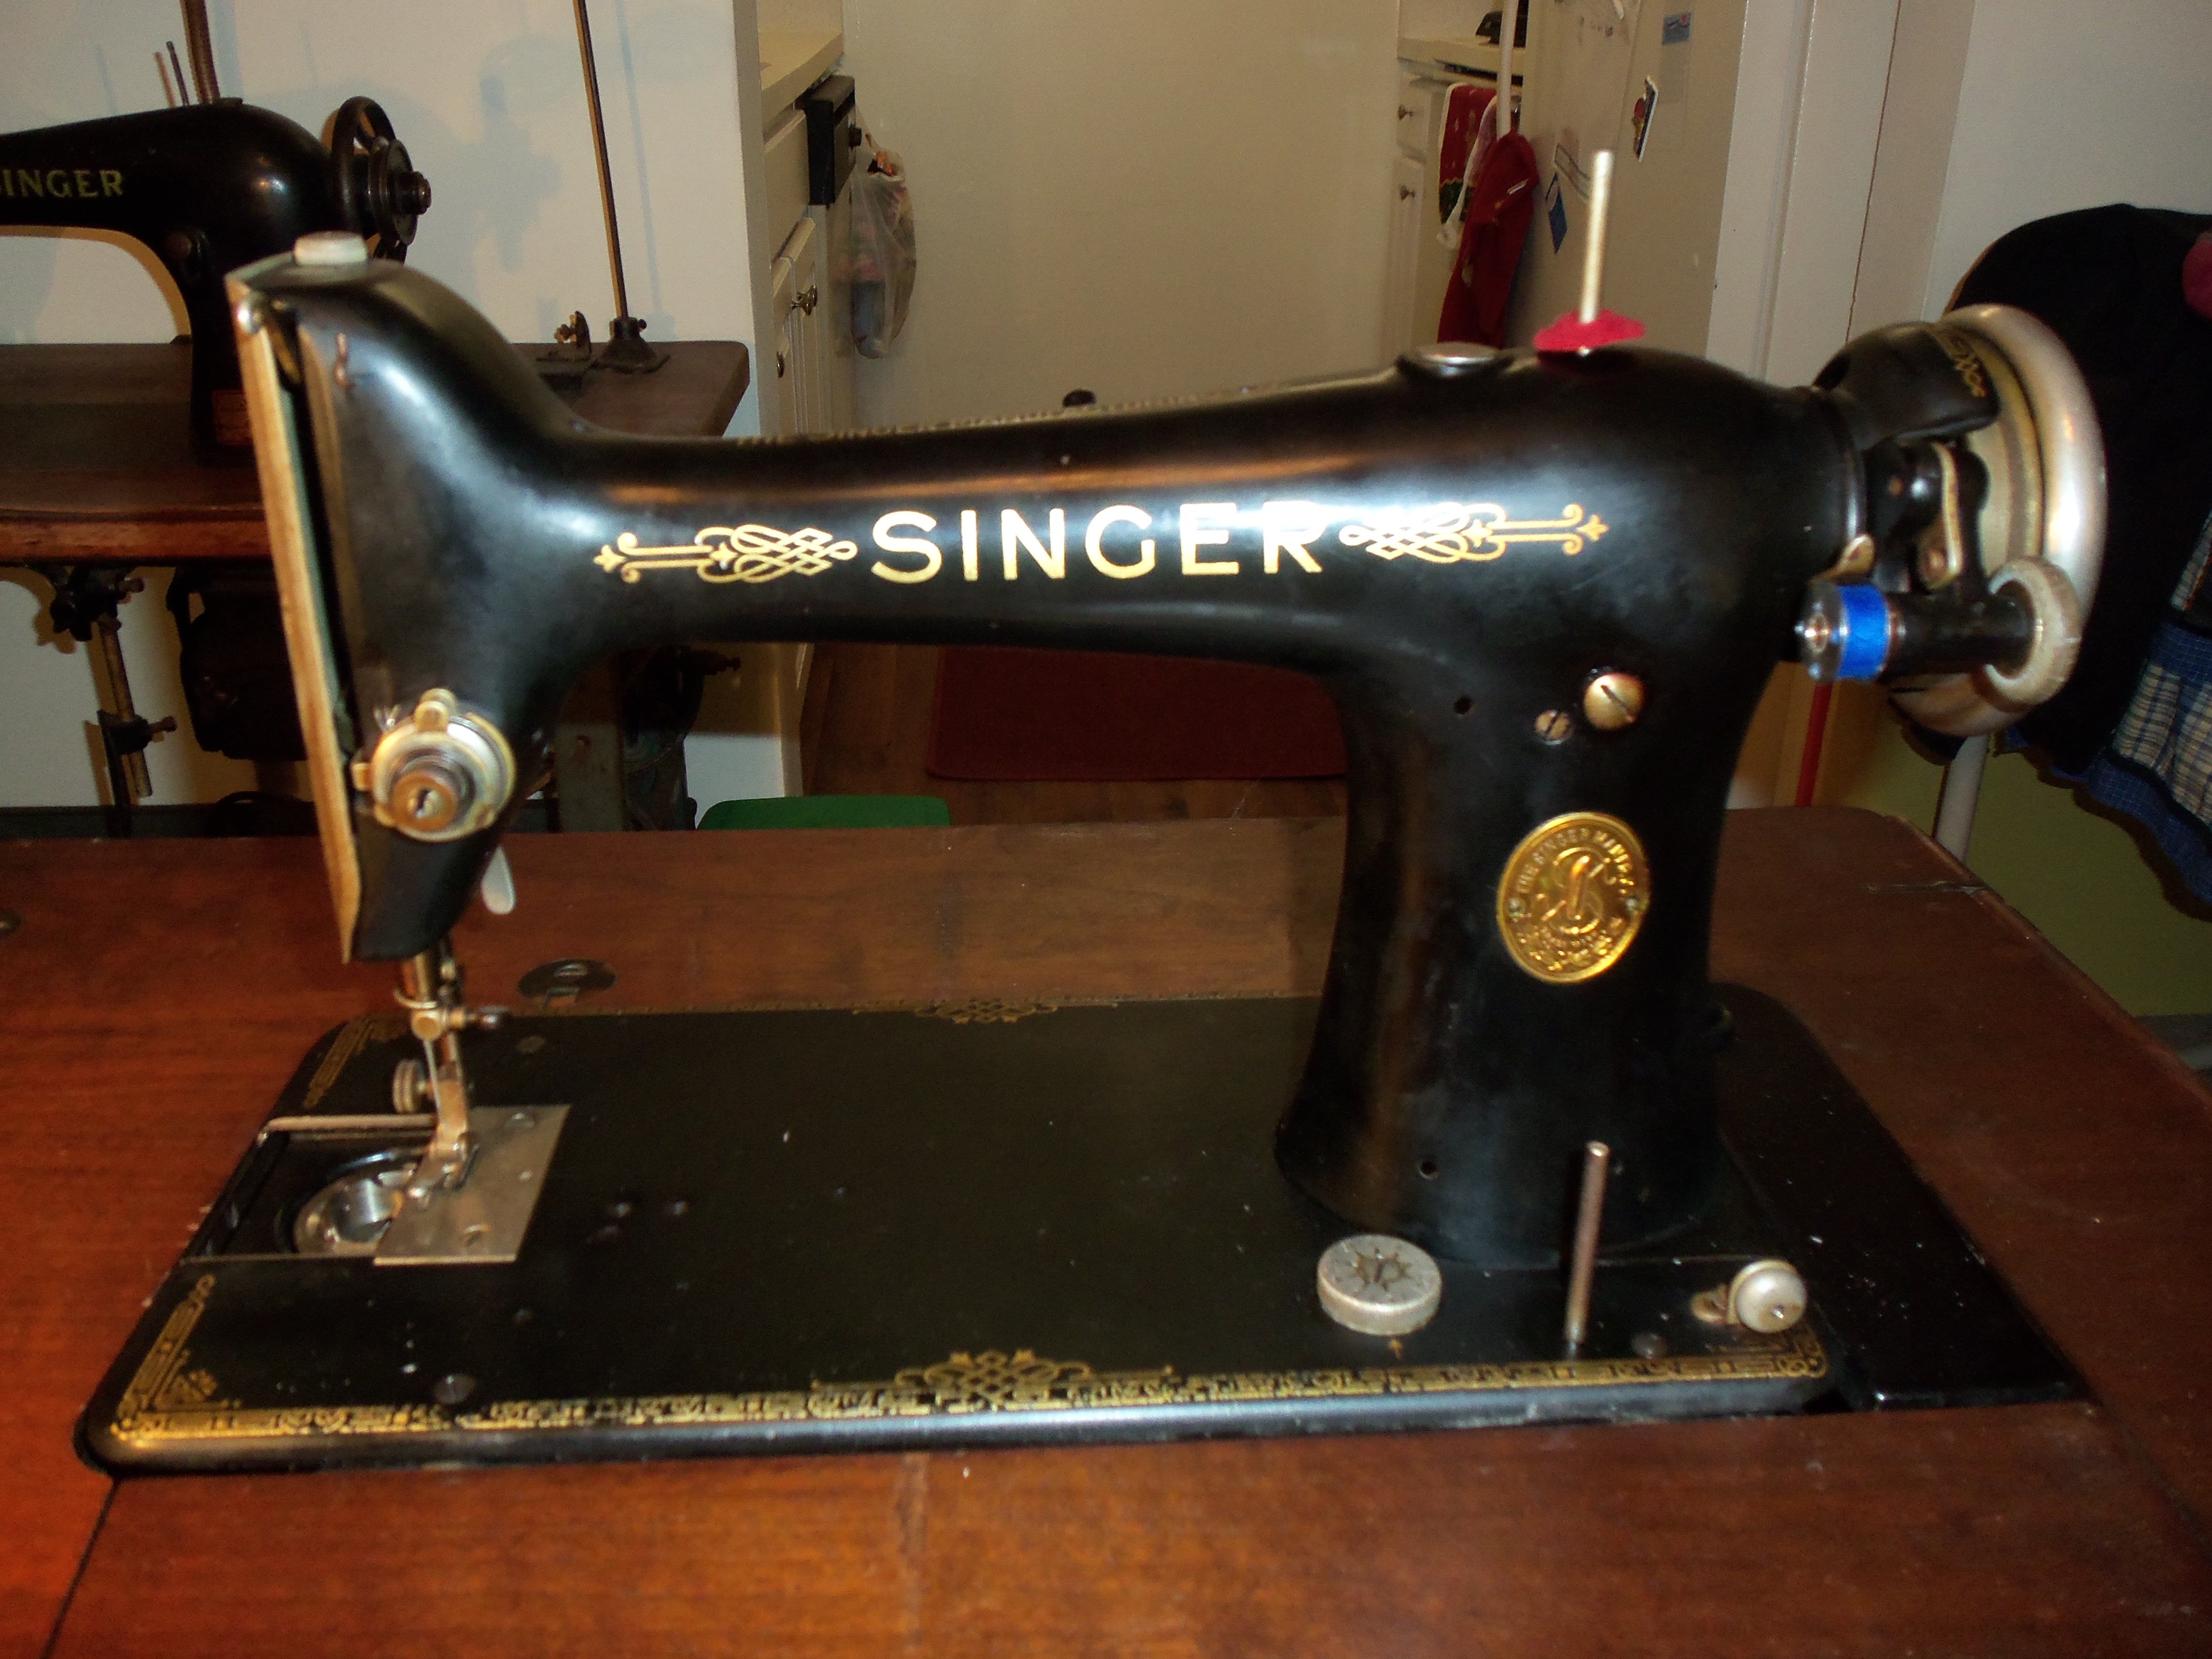 Singer sewing machine model number lookup